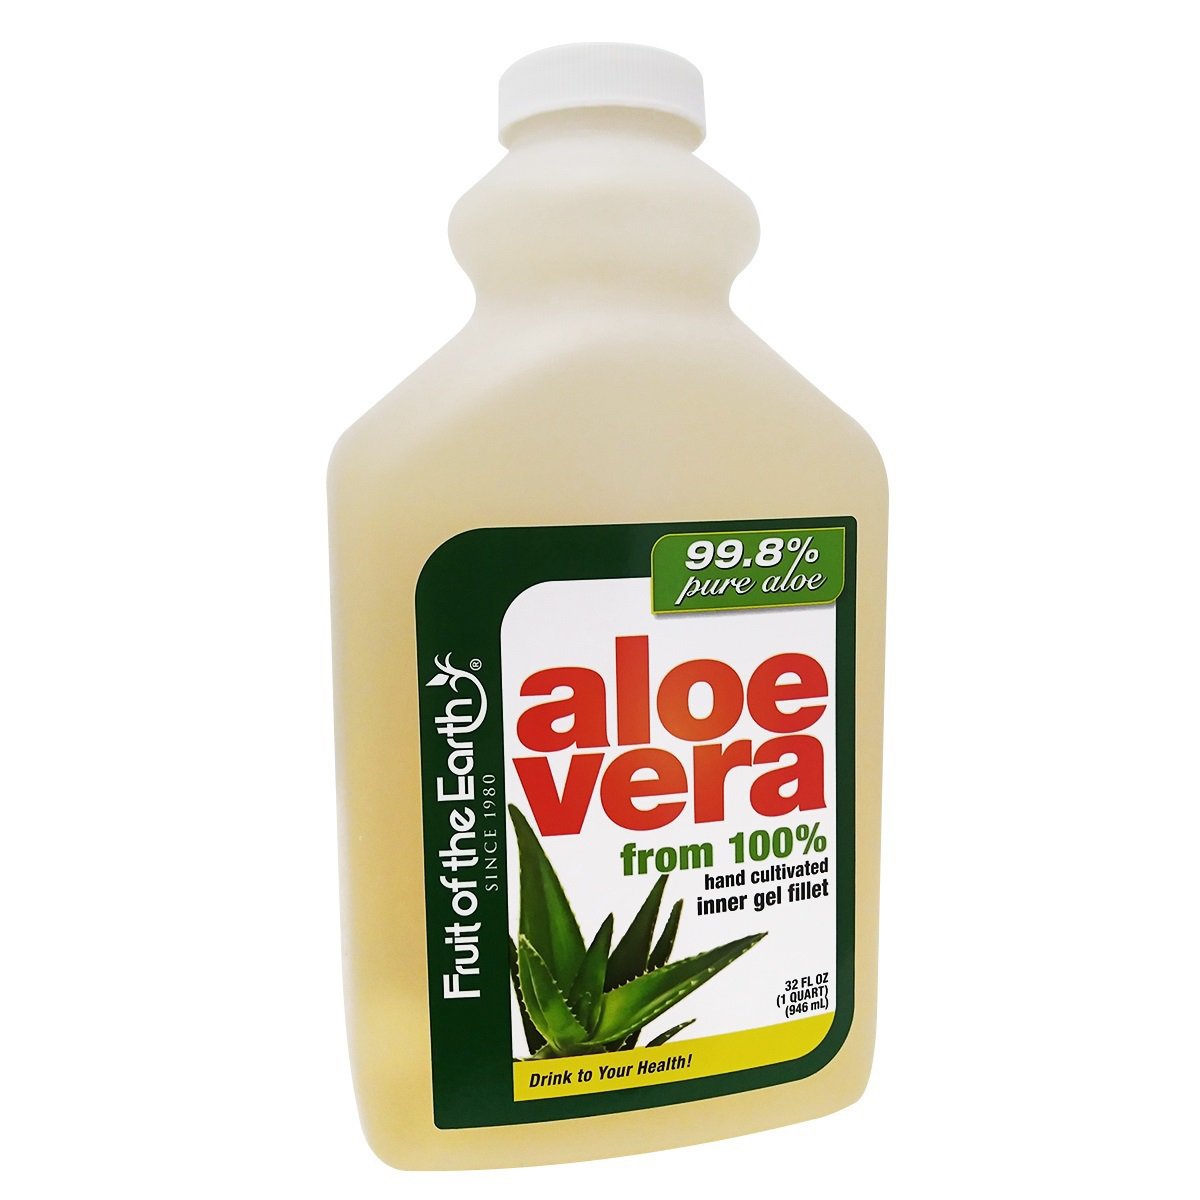 Fruit of the Earth Aloe Vera Juice - Shop Herbs & Homeopathy at H-E-B